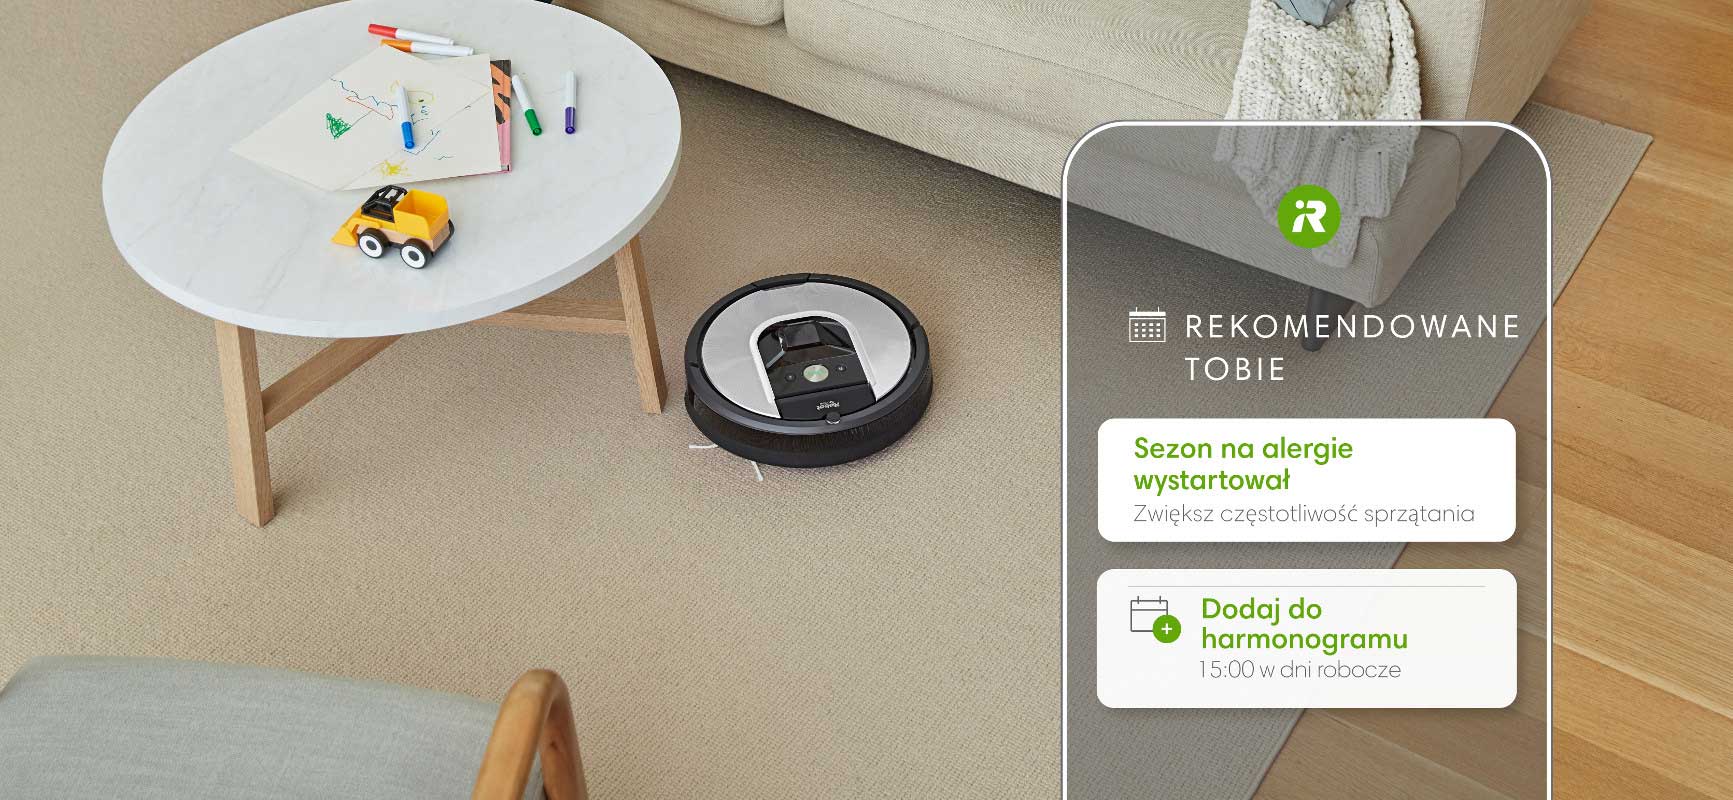 iRobot Roomba serii 900 personalizowane sugestie sprzątania